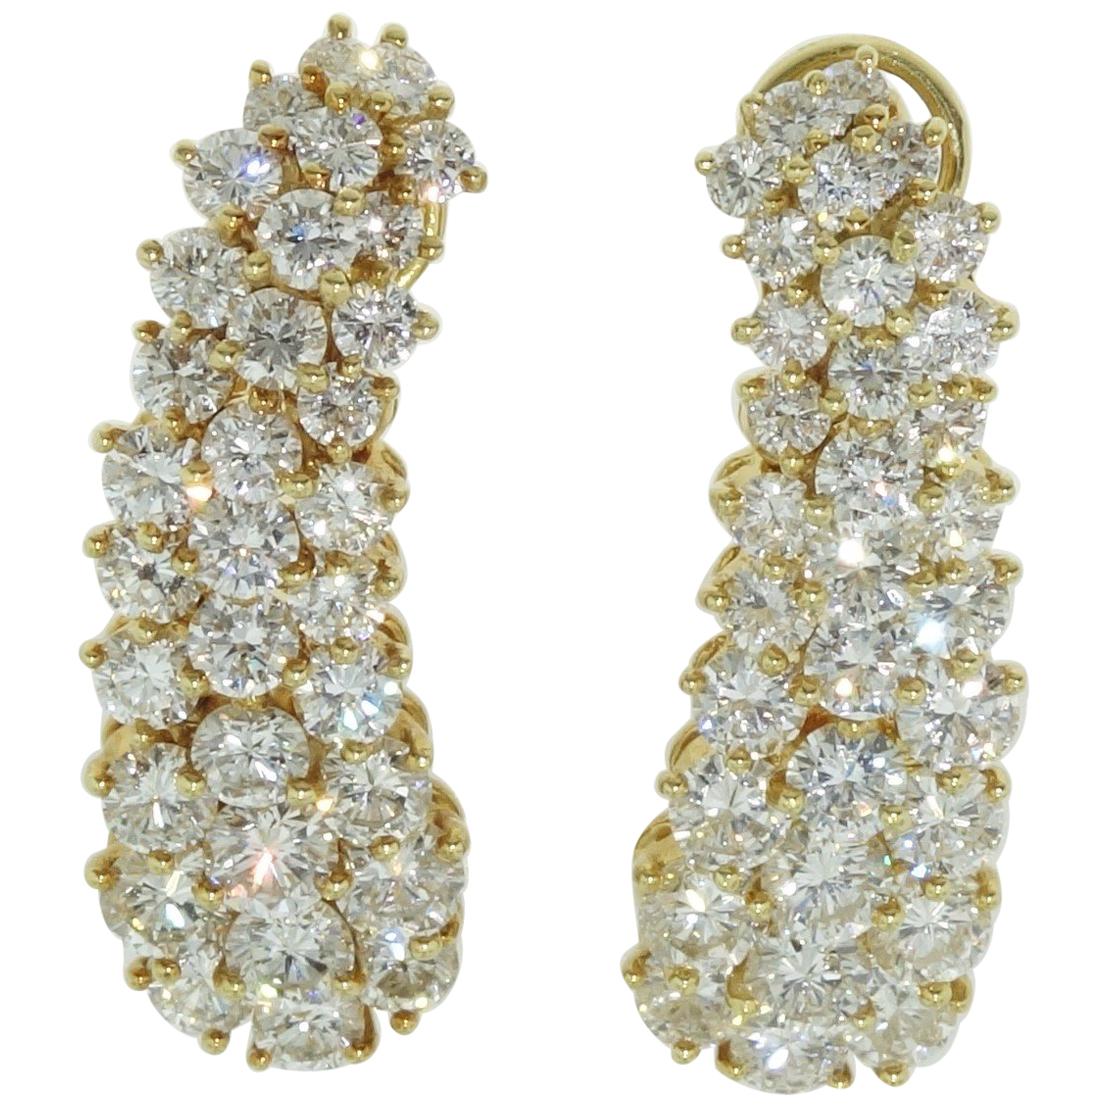 Kurt Wayne Oval Emerald Diamond Gold Omega Clip/Post Back Earrings at ...